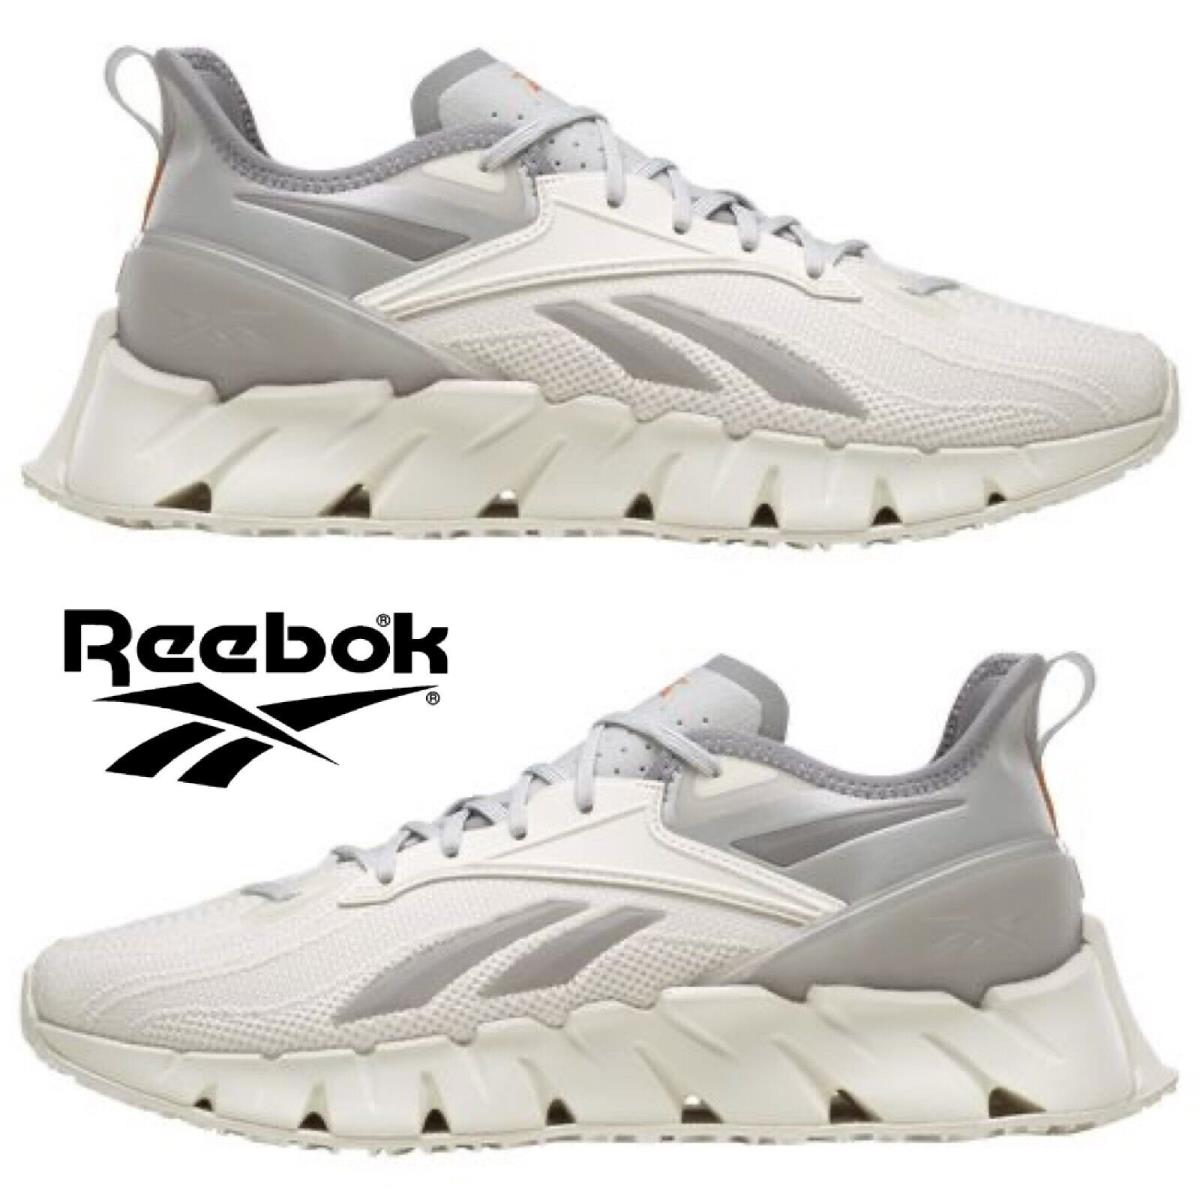 Reebok Zig Kinetica 3 Men`s Sneakers Hiking Walking Running Shoes Casual Sport - Gray, Manufacturer: Pure Grey/Chalk/Pure Grey